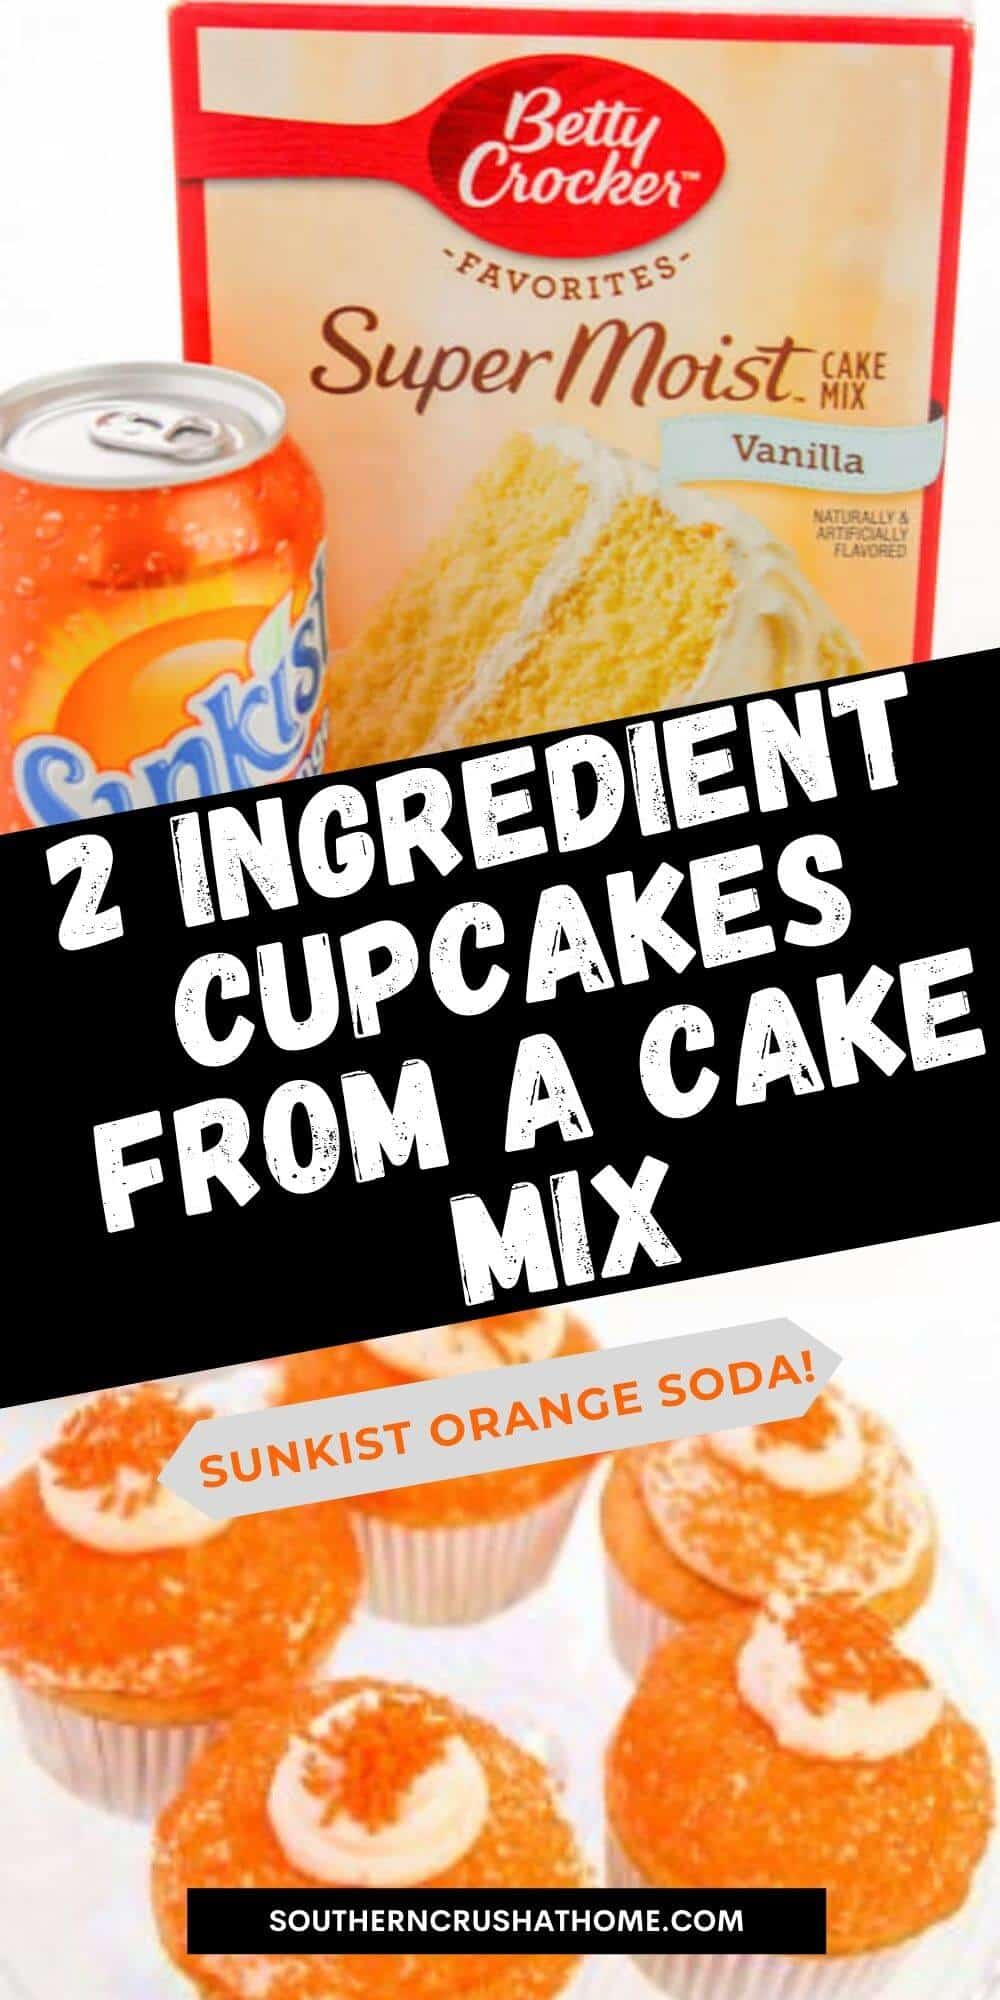 sunkist orange soda cupcakes from a box